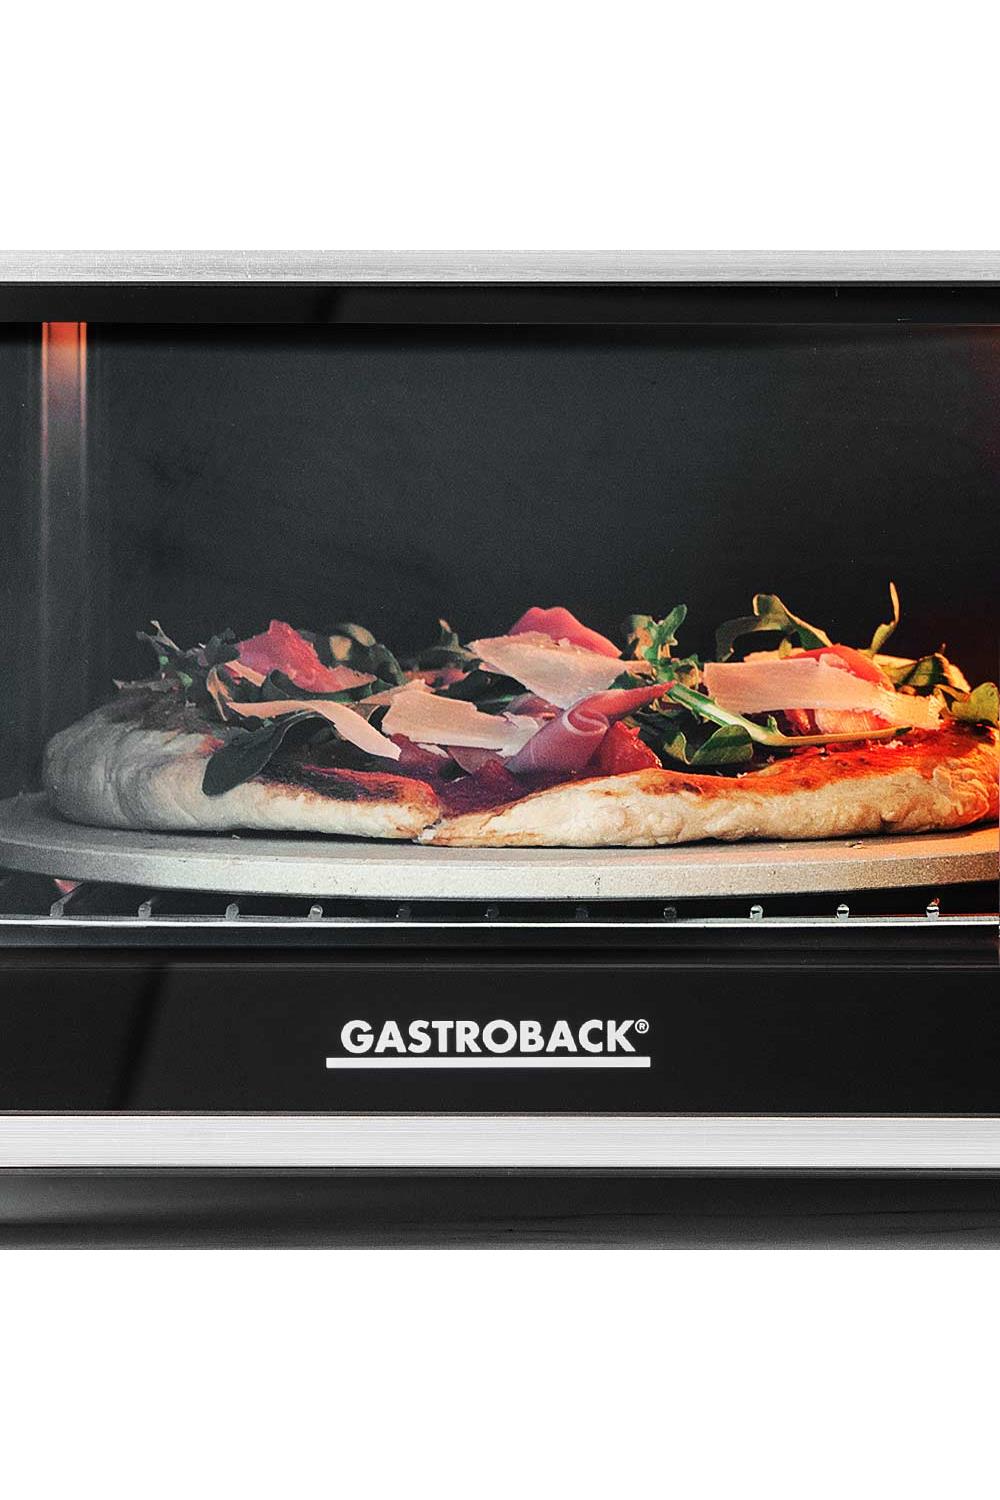 GASTROBACK Design 62814 Bistro Oven Bake & Grill, 1500w, Stainless Steel, Digital, Pizza Oven, Black